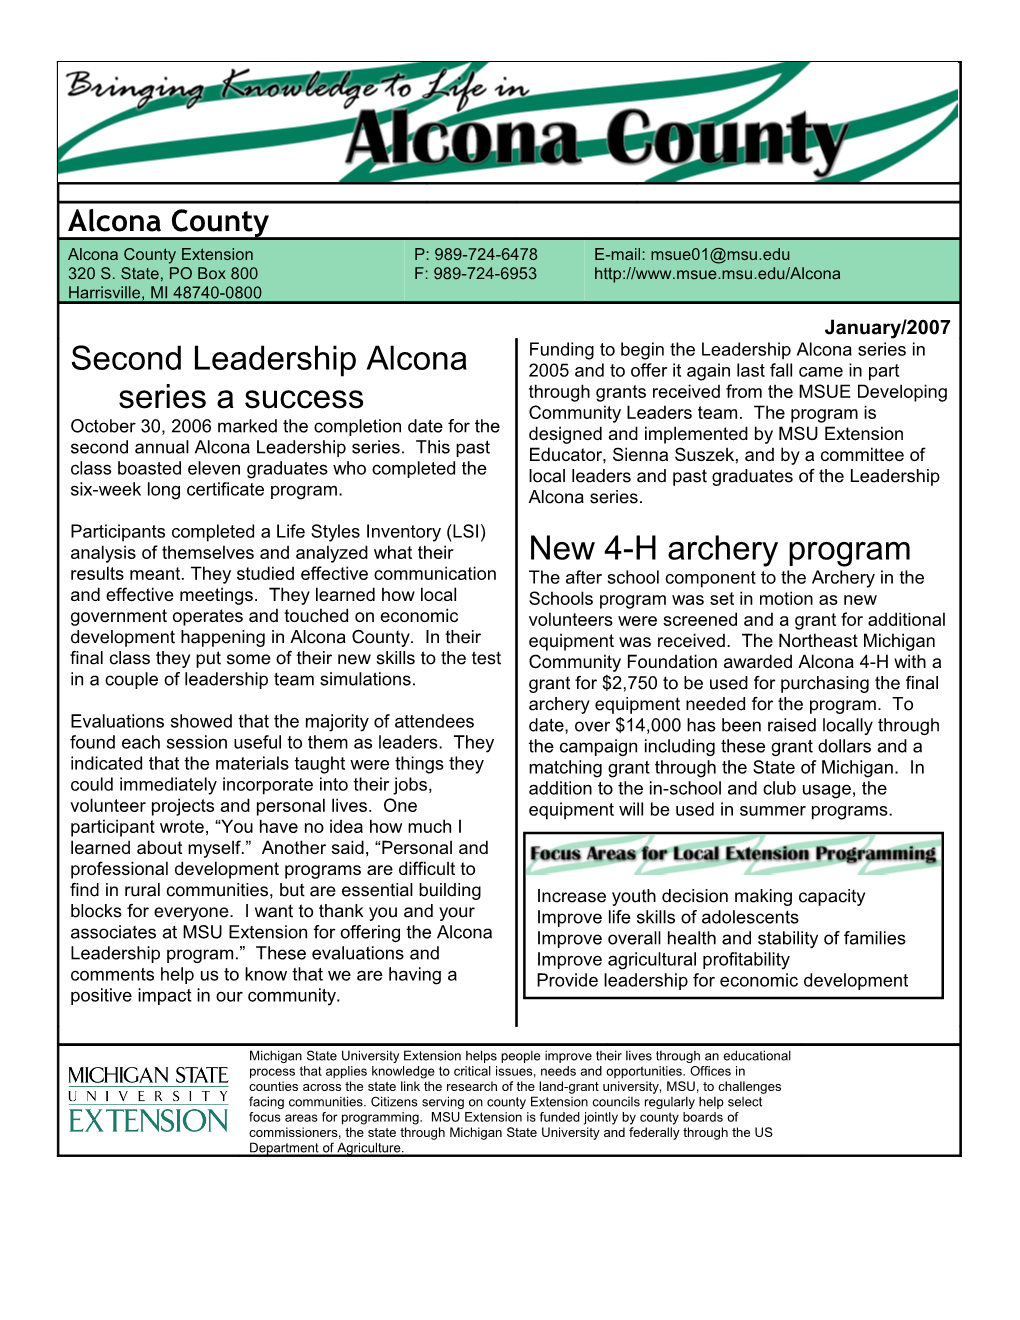 Second Leadership Alcona Series a Success